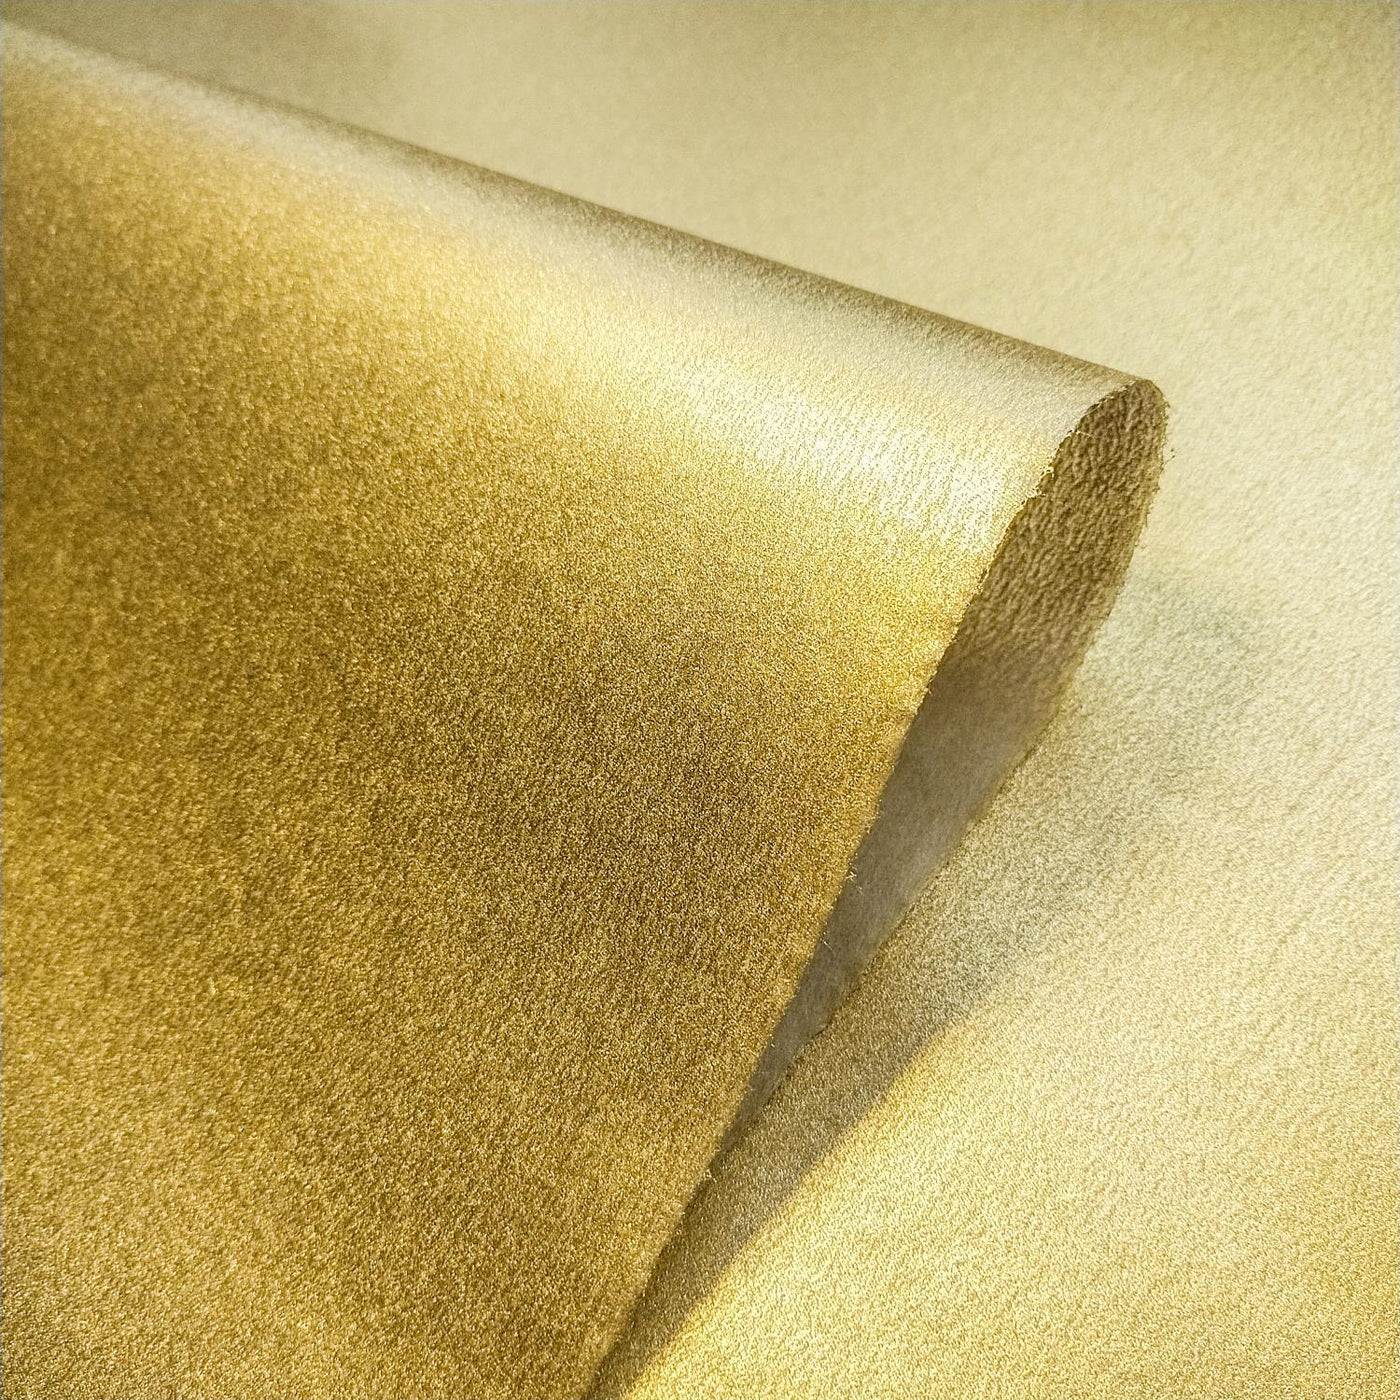 Gleaming Metallic Kozo Mulberry Paper (Gold)